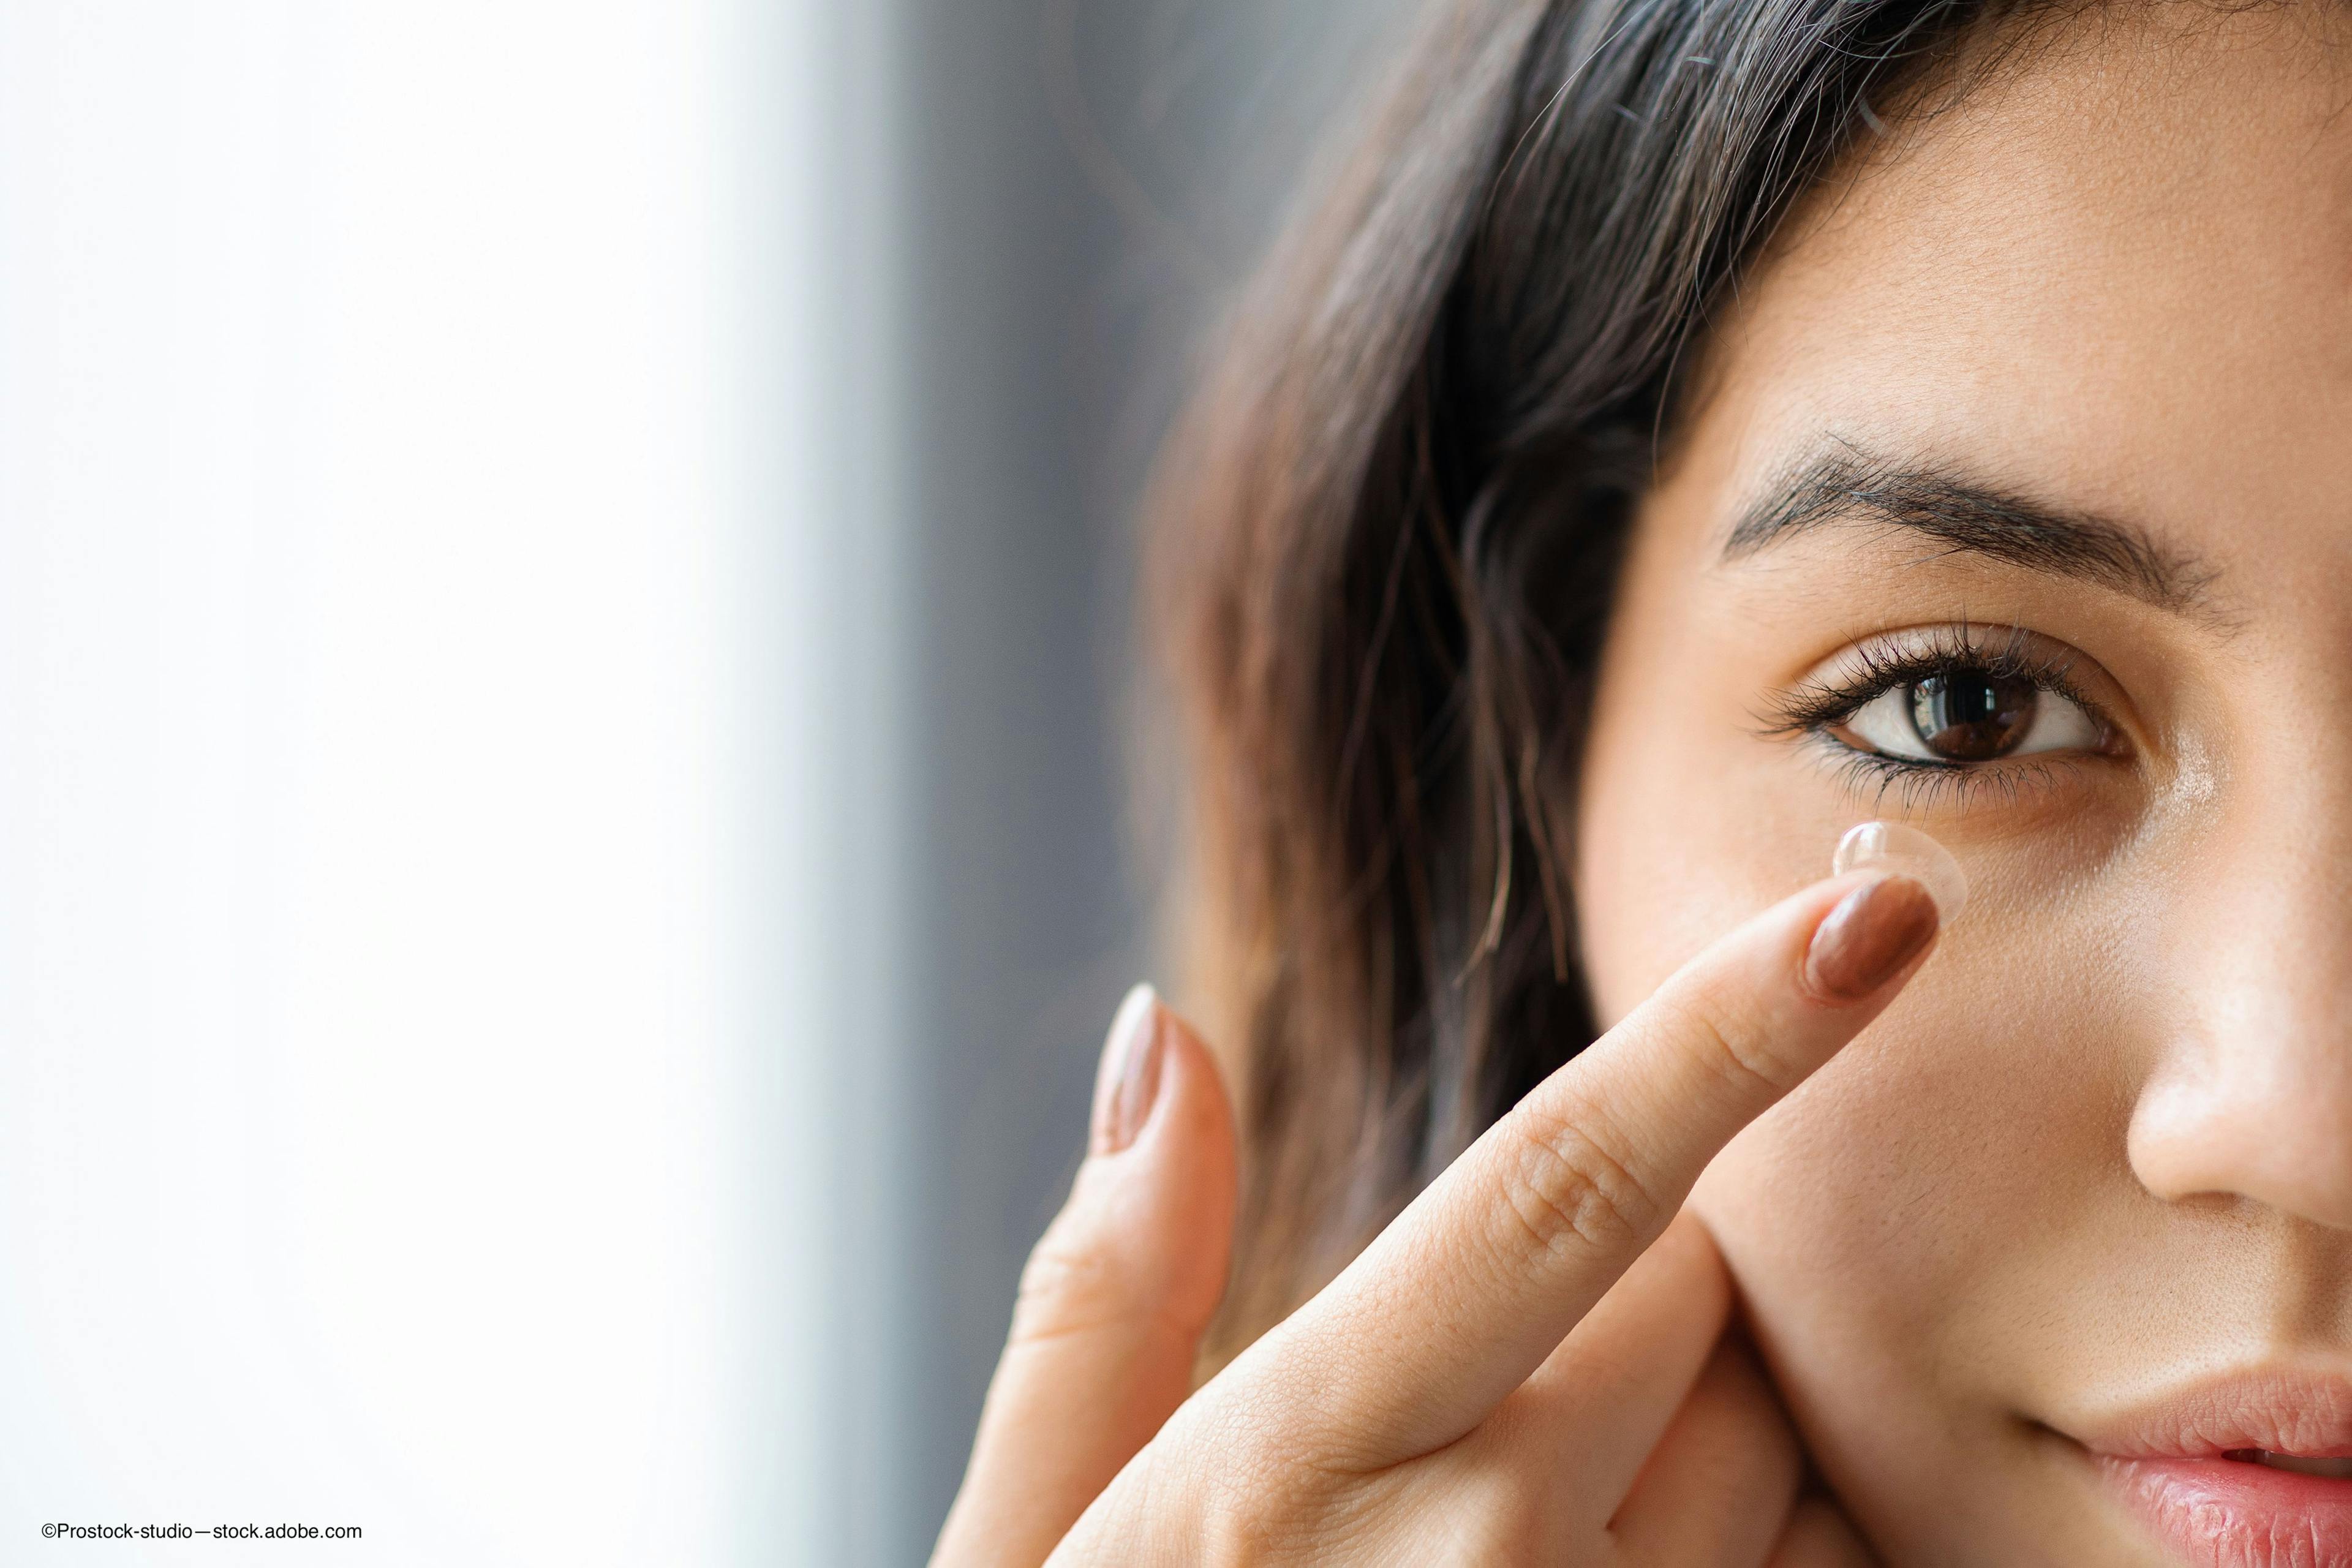 woman inserting contact lens optometry news - ©Prostock-studio